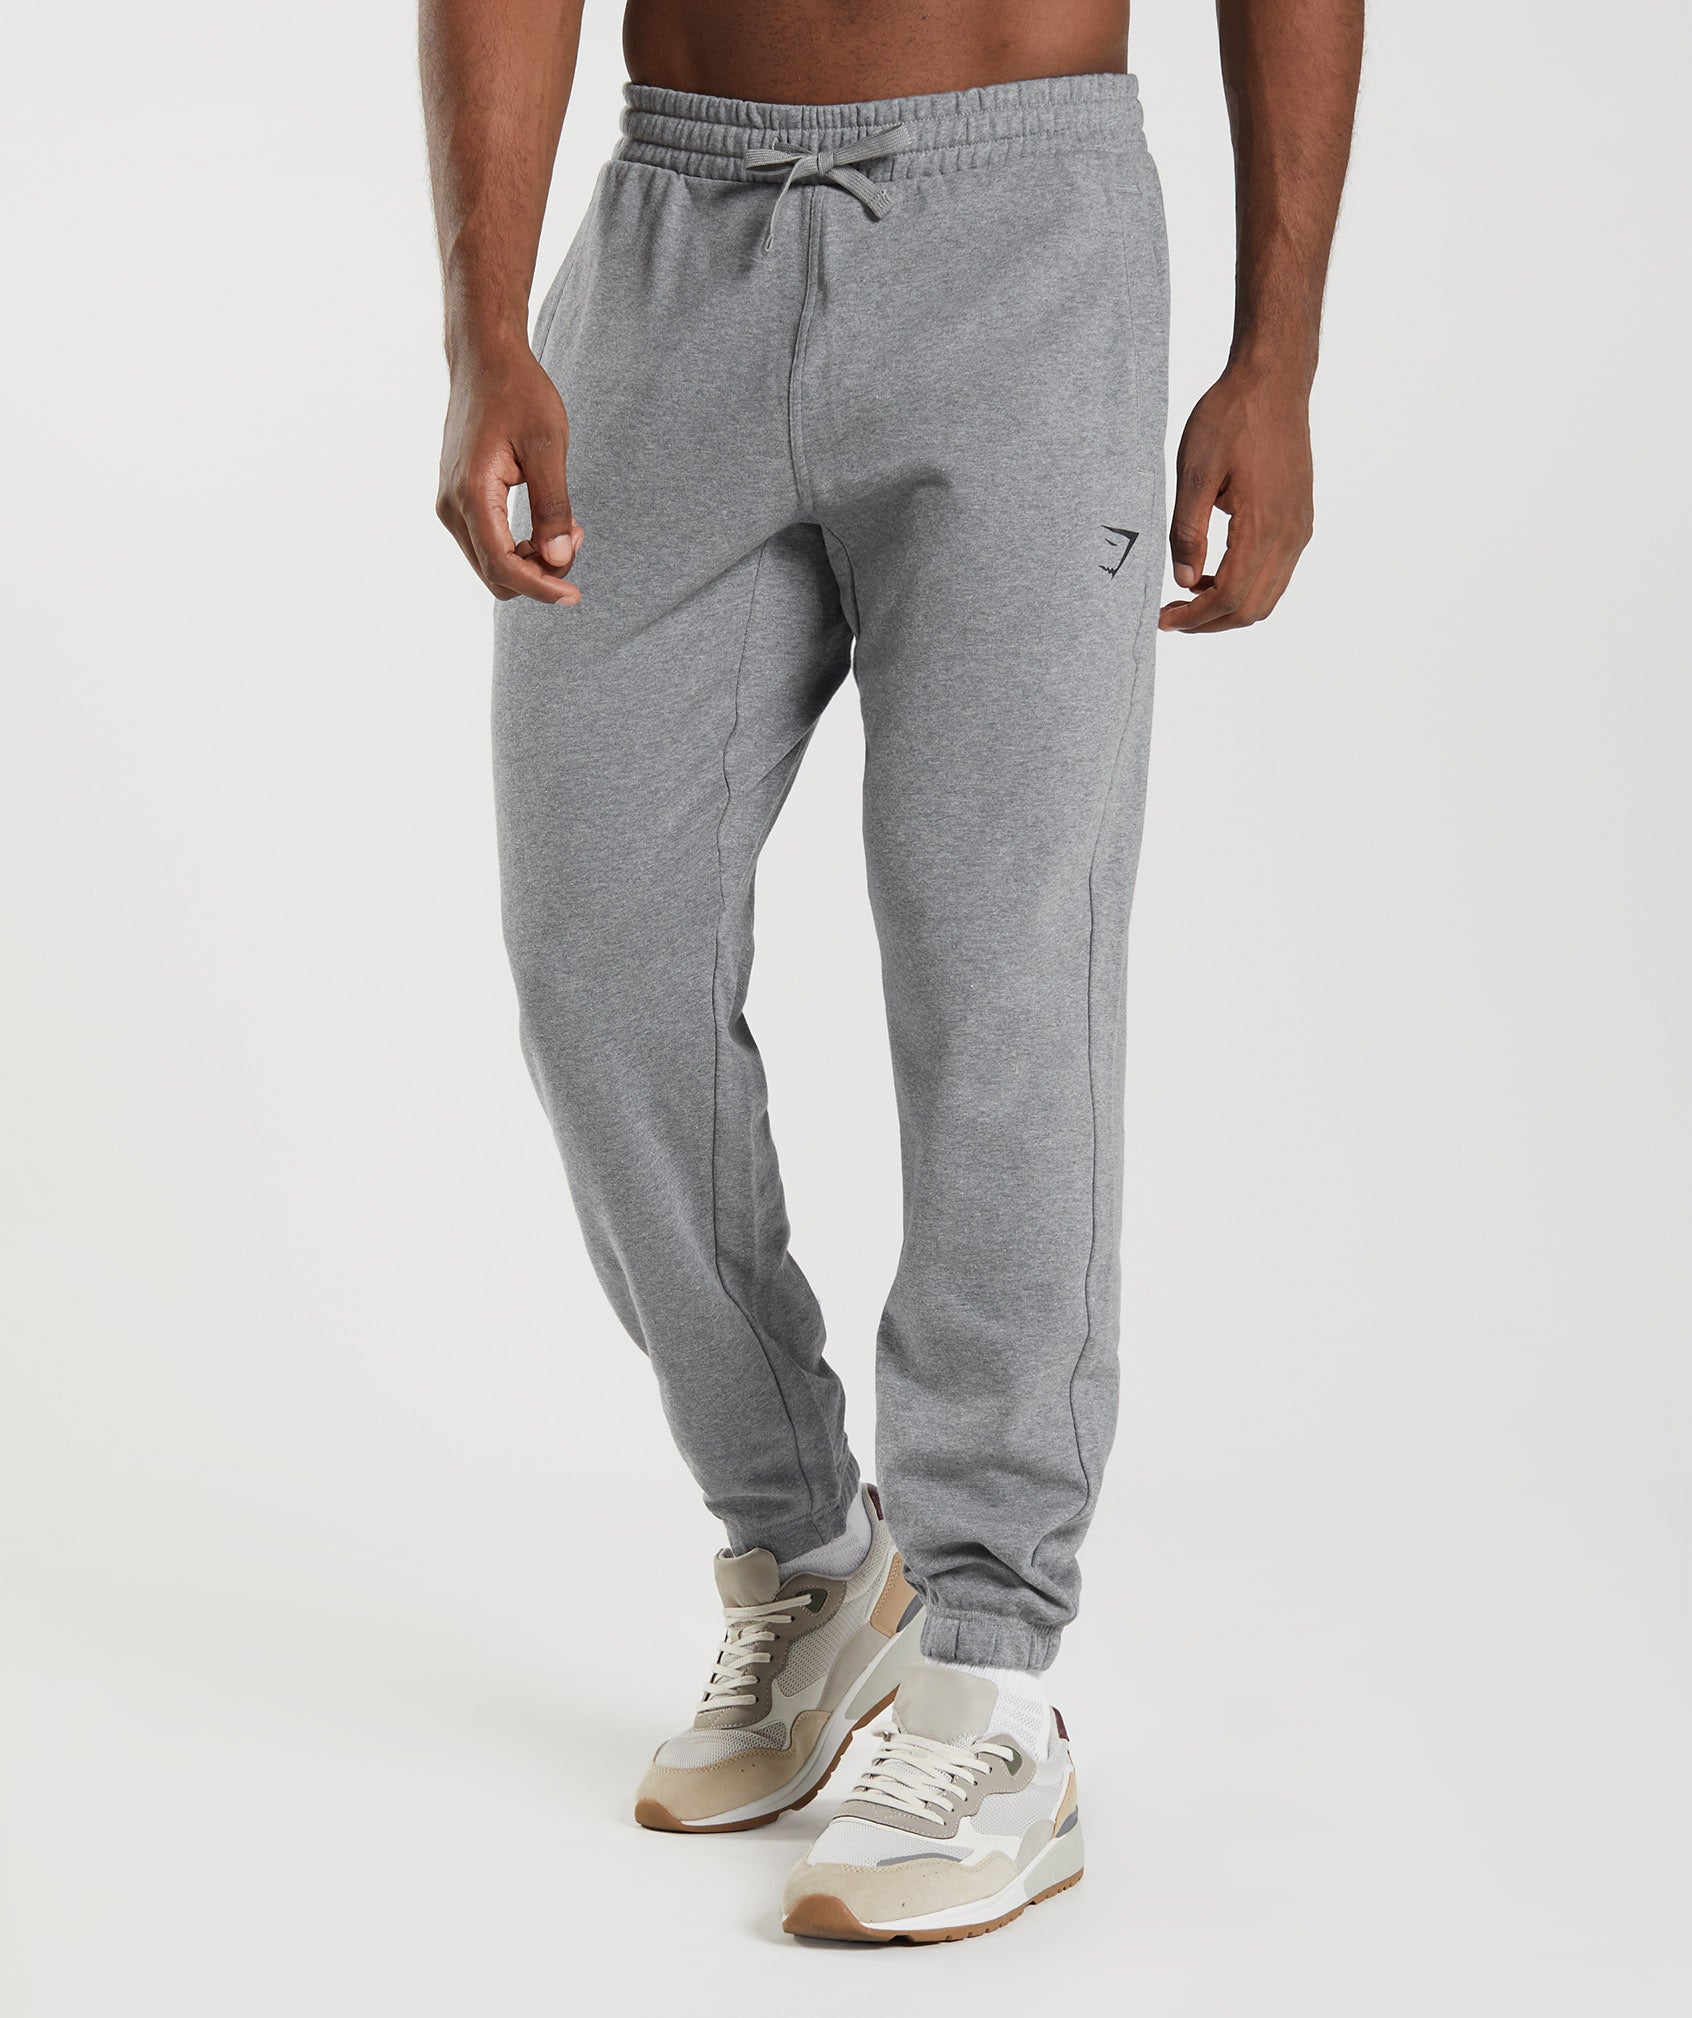 symoid Mens Athletic Sweatpants- Sweatpants Leisure Suit Slim Fit Fitness  Running Two-piece Set Khaki XL 